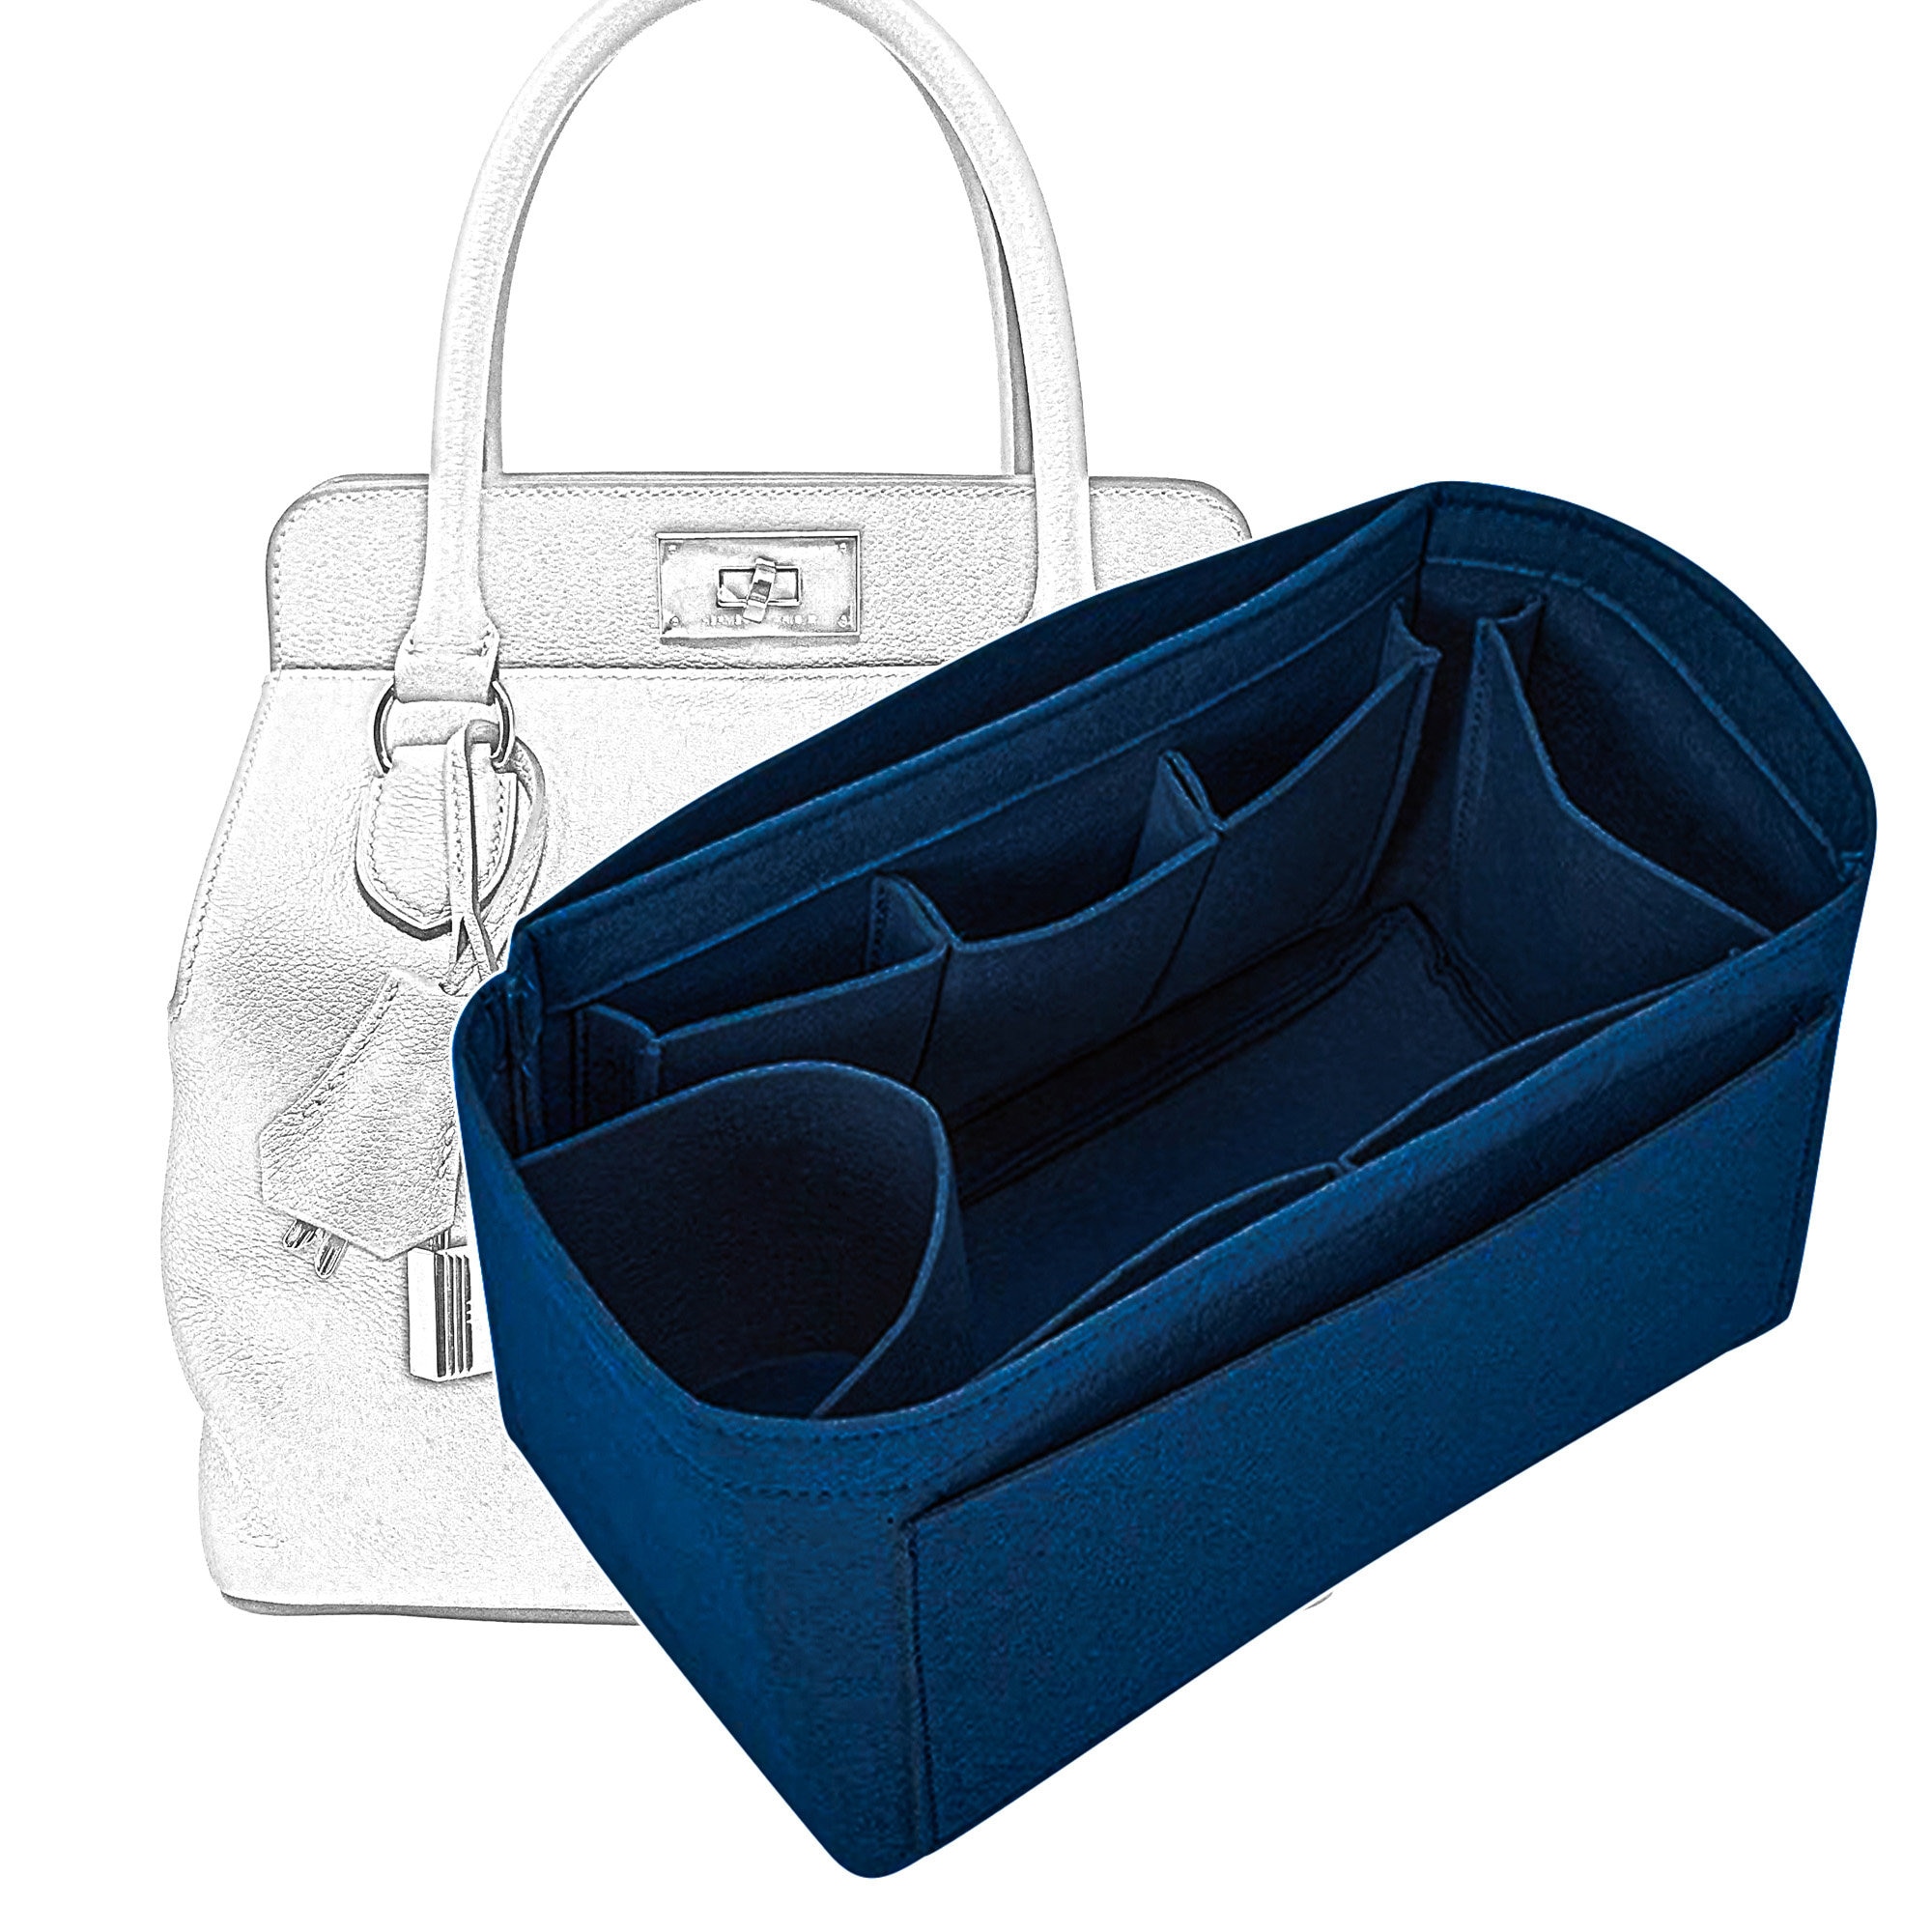 5 Pcs Dust Bags for Purses Handbags Silk Dust Cover Storage Bag Drawstring  Travel Storage Pouch for Handbag Purse Shoes Boots - AliExpress